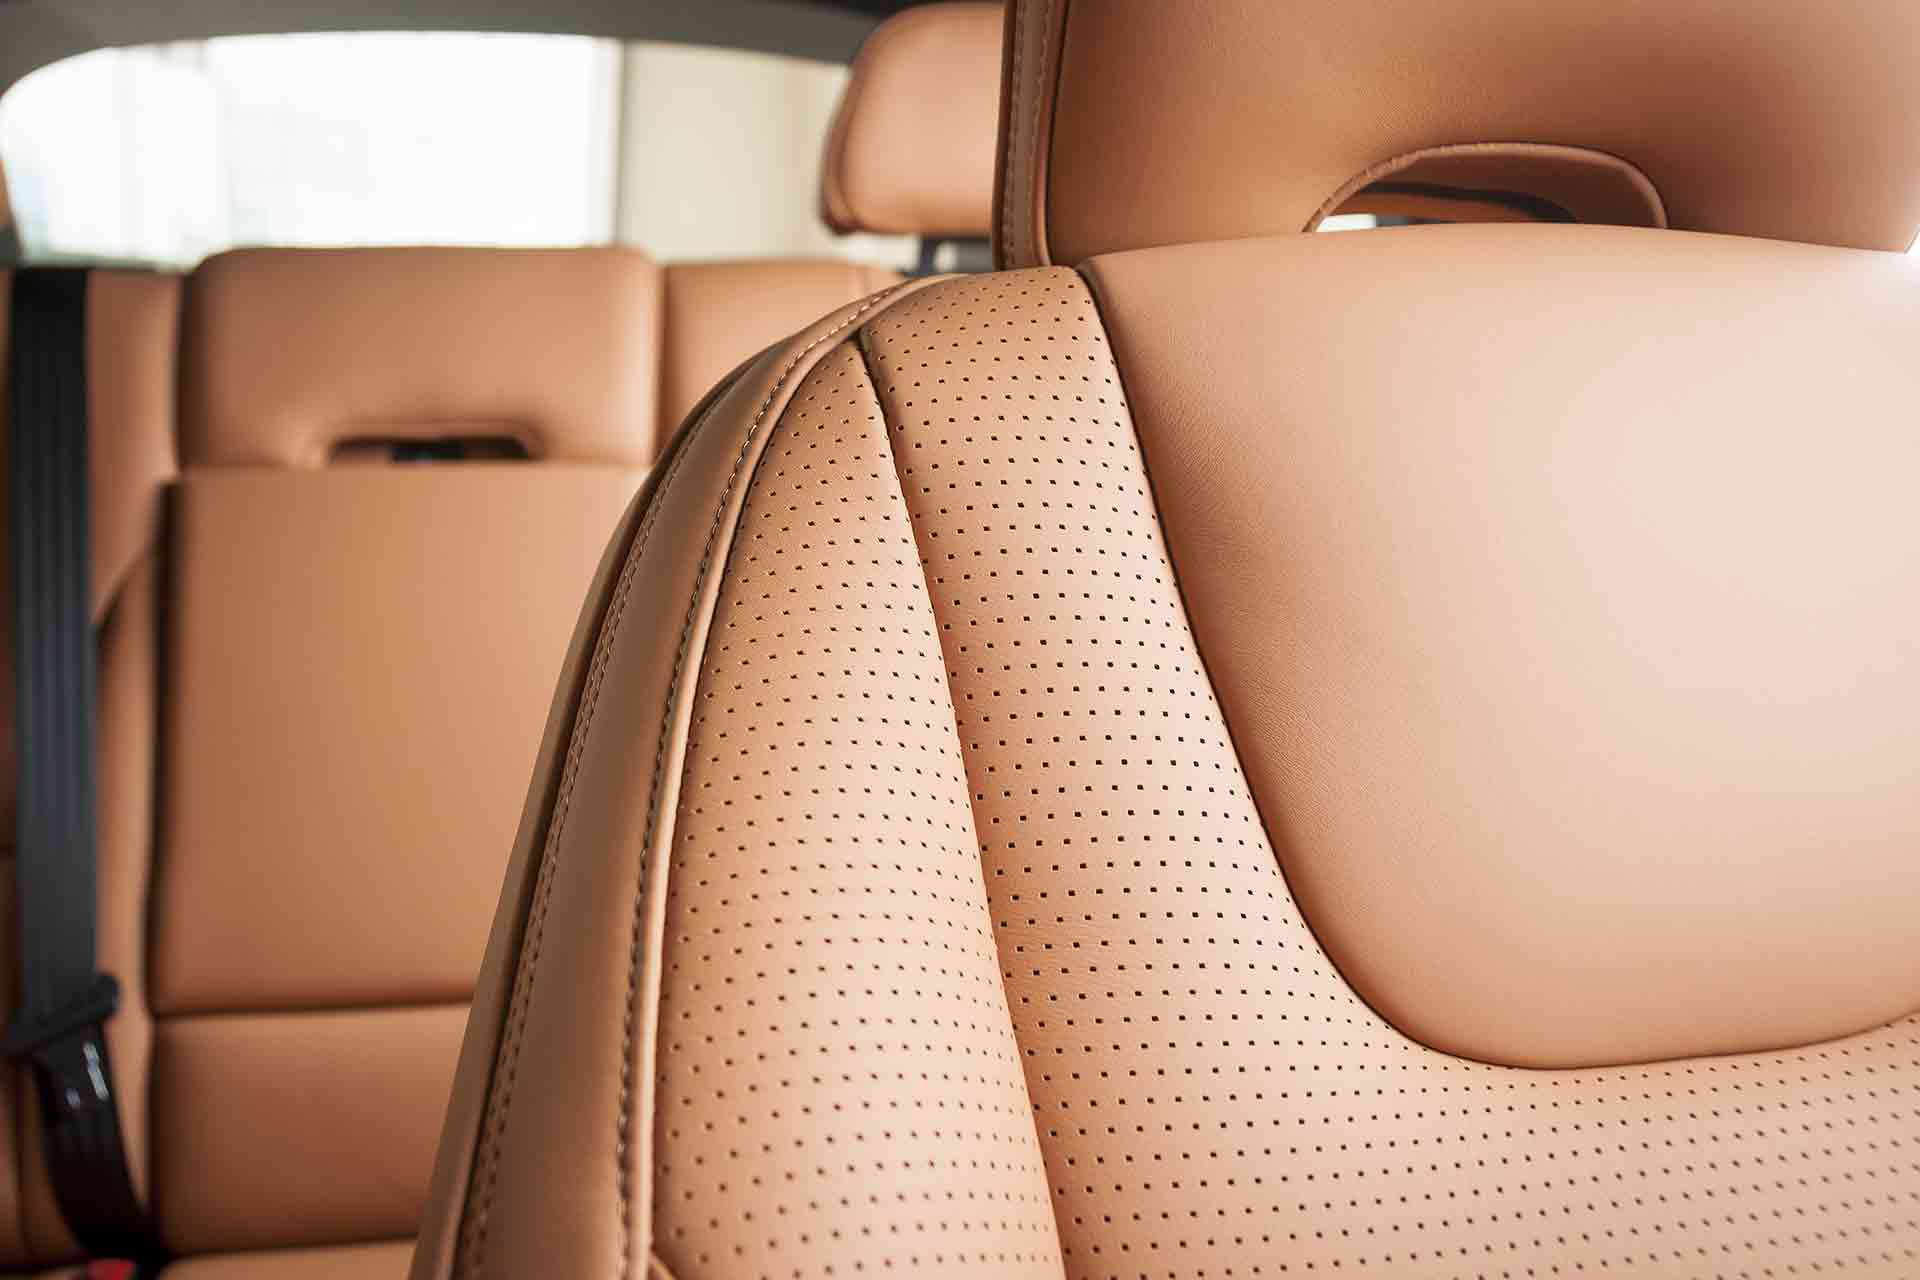 https://www.checkatrade.com/blog/wp-content/uploads/2021/05/Reupholster-car-seats-cost-1.jpg